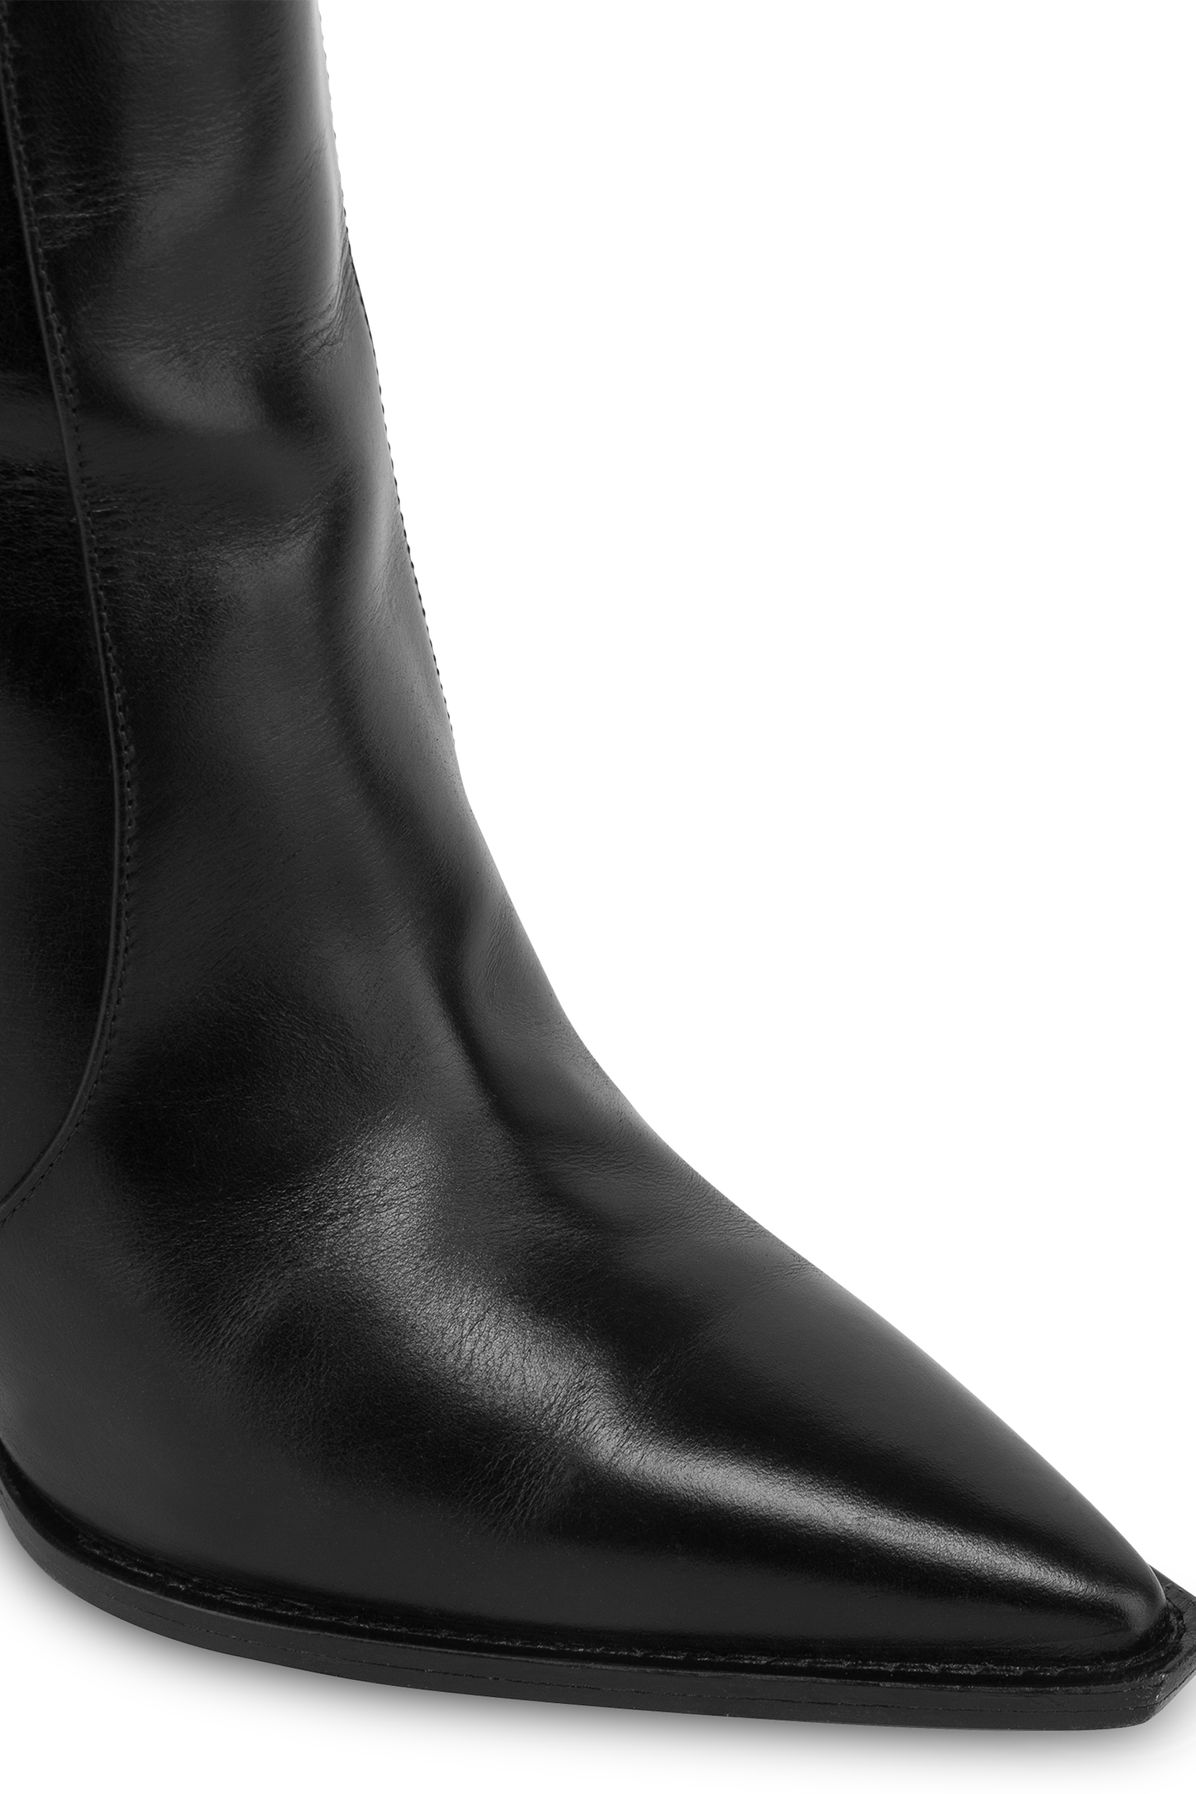 Alberta Ferretti Walking calf leather ankle boots